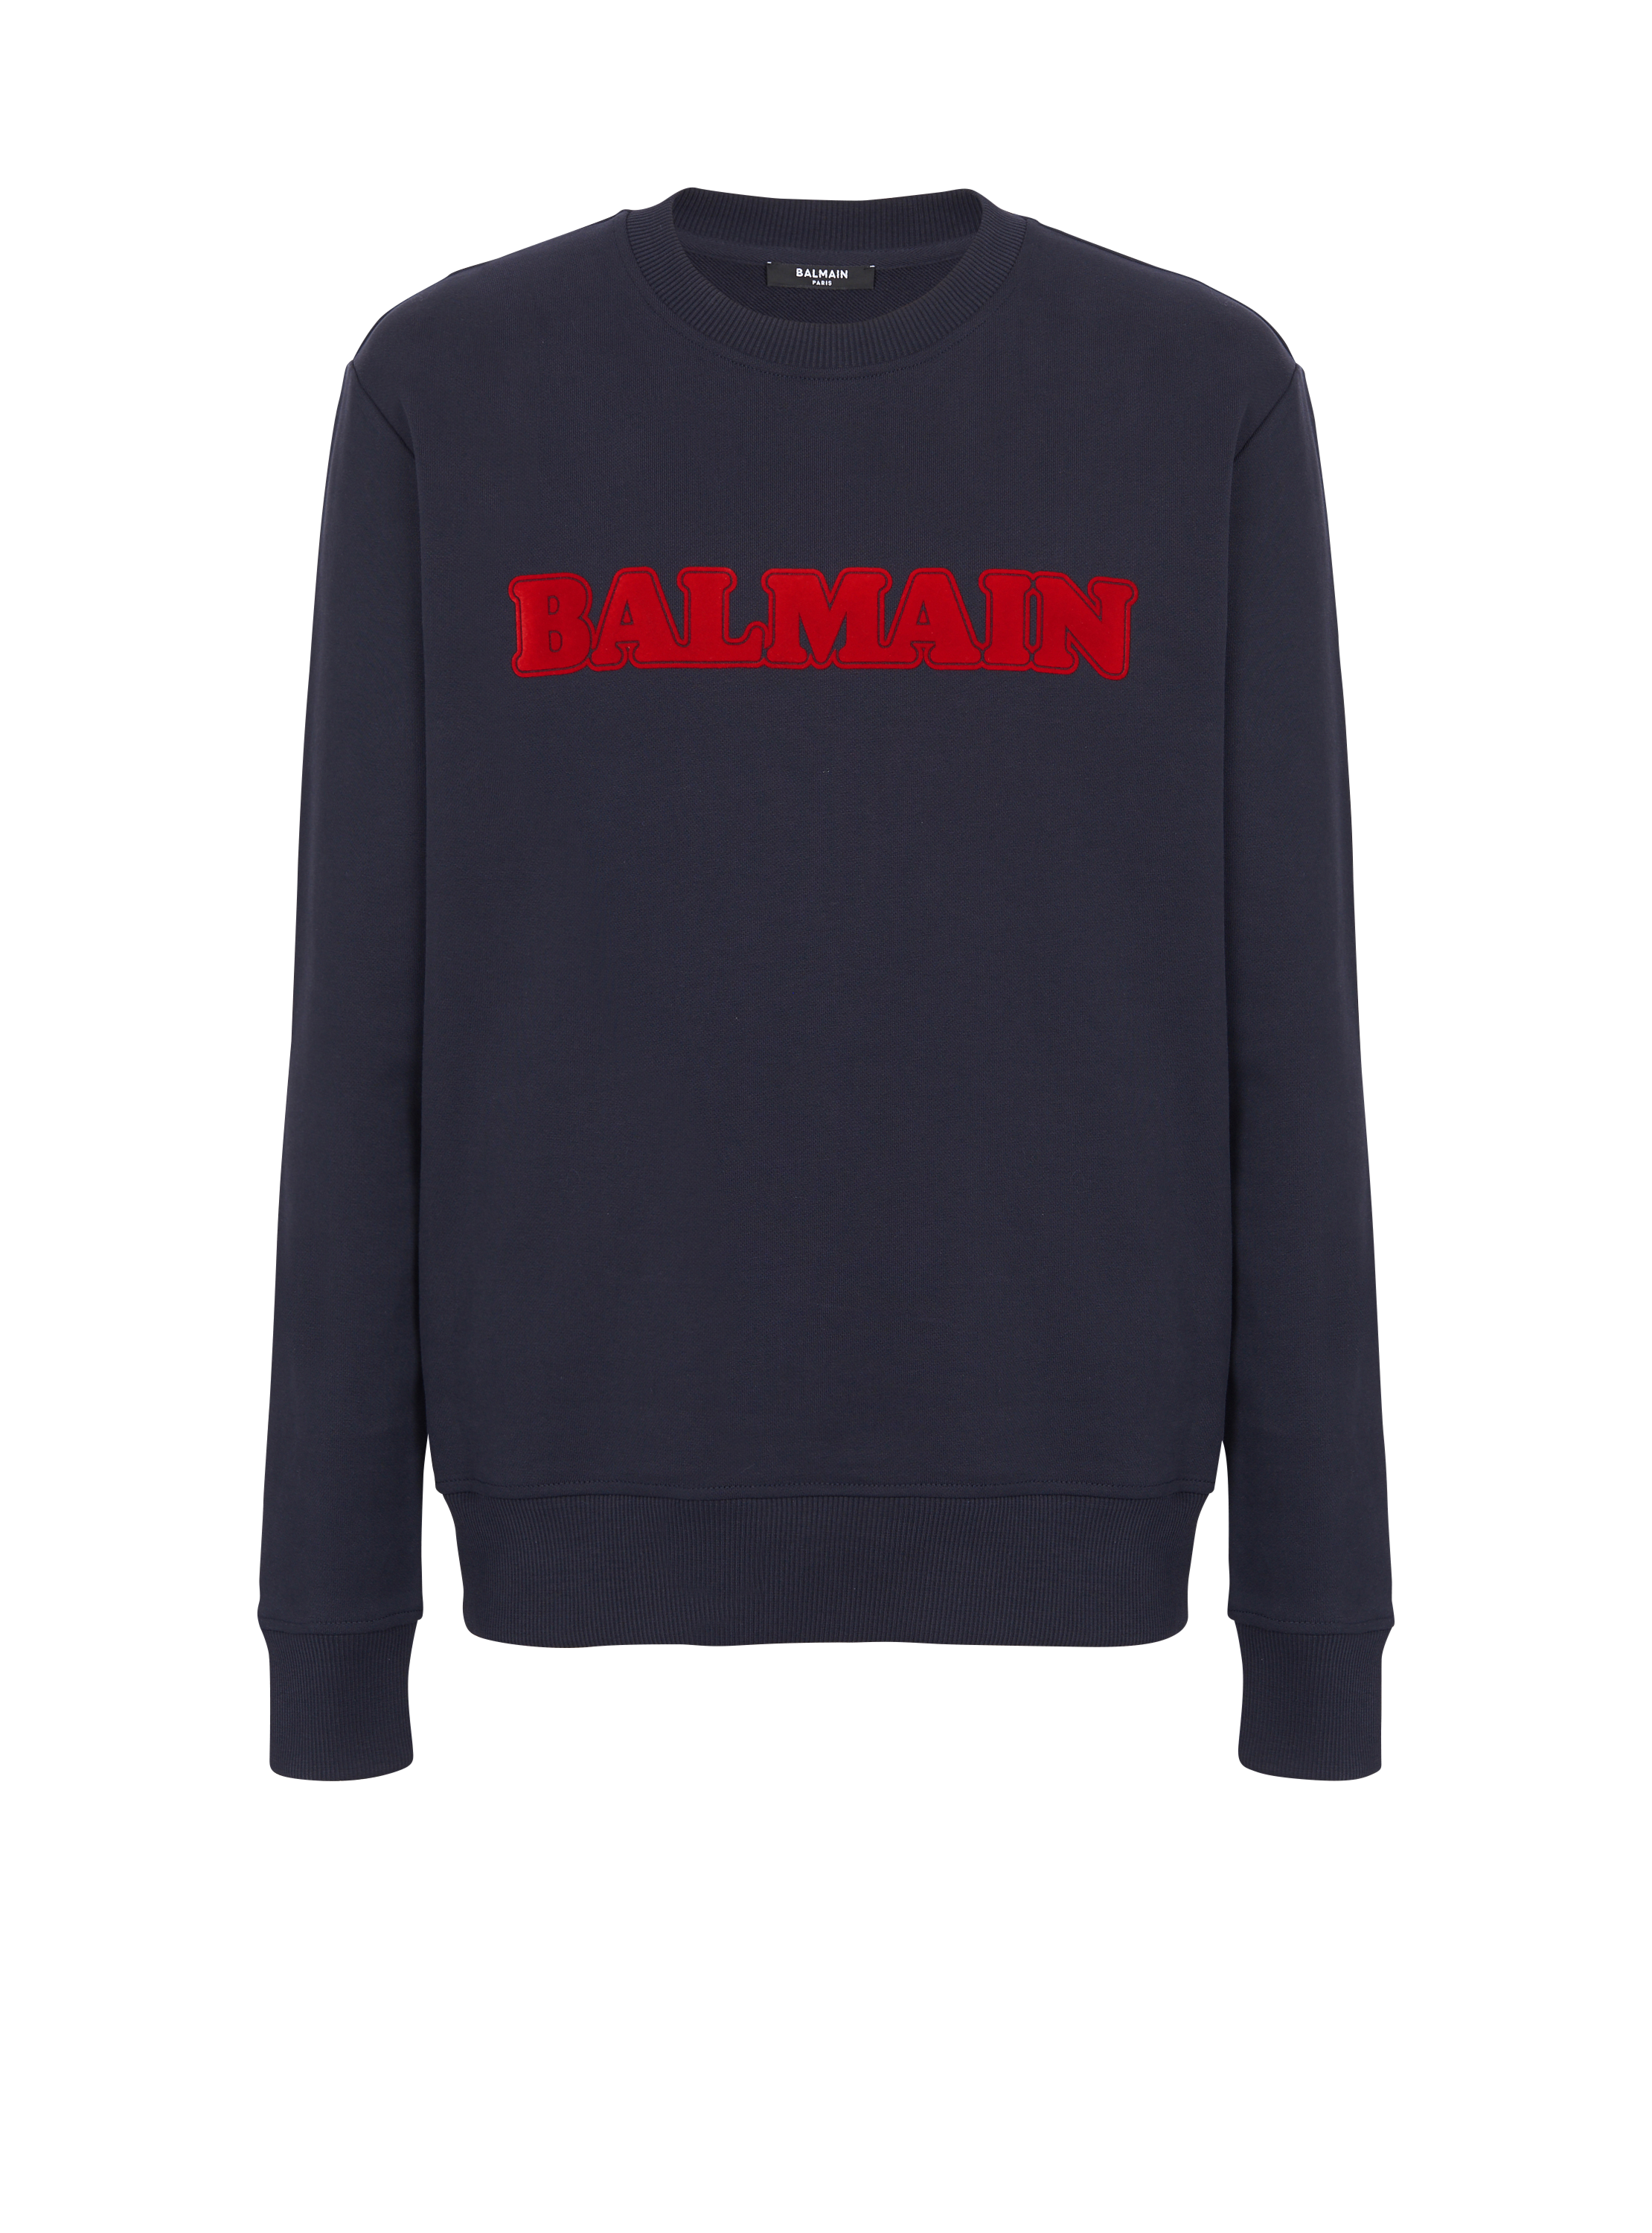 Flocked retro Balmain sweatshirt, navy, hi-res